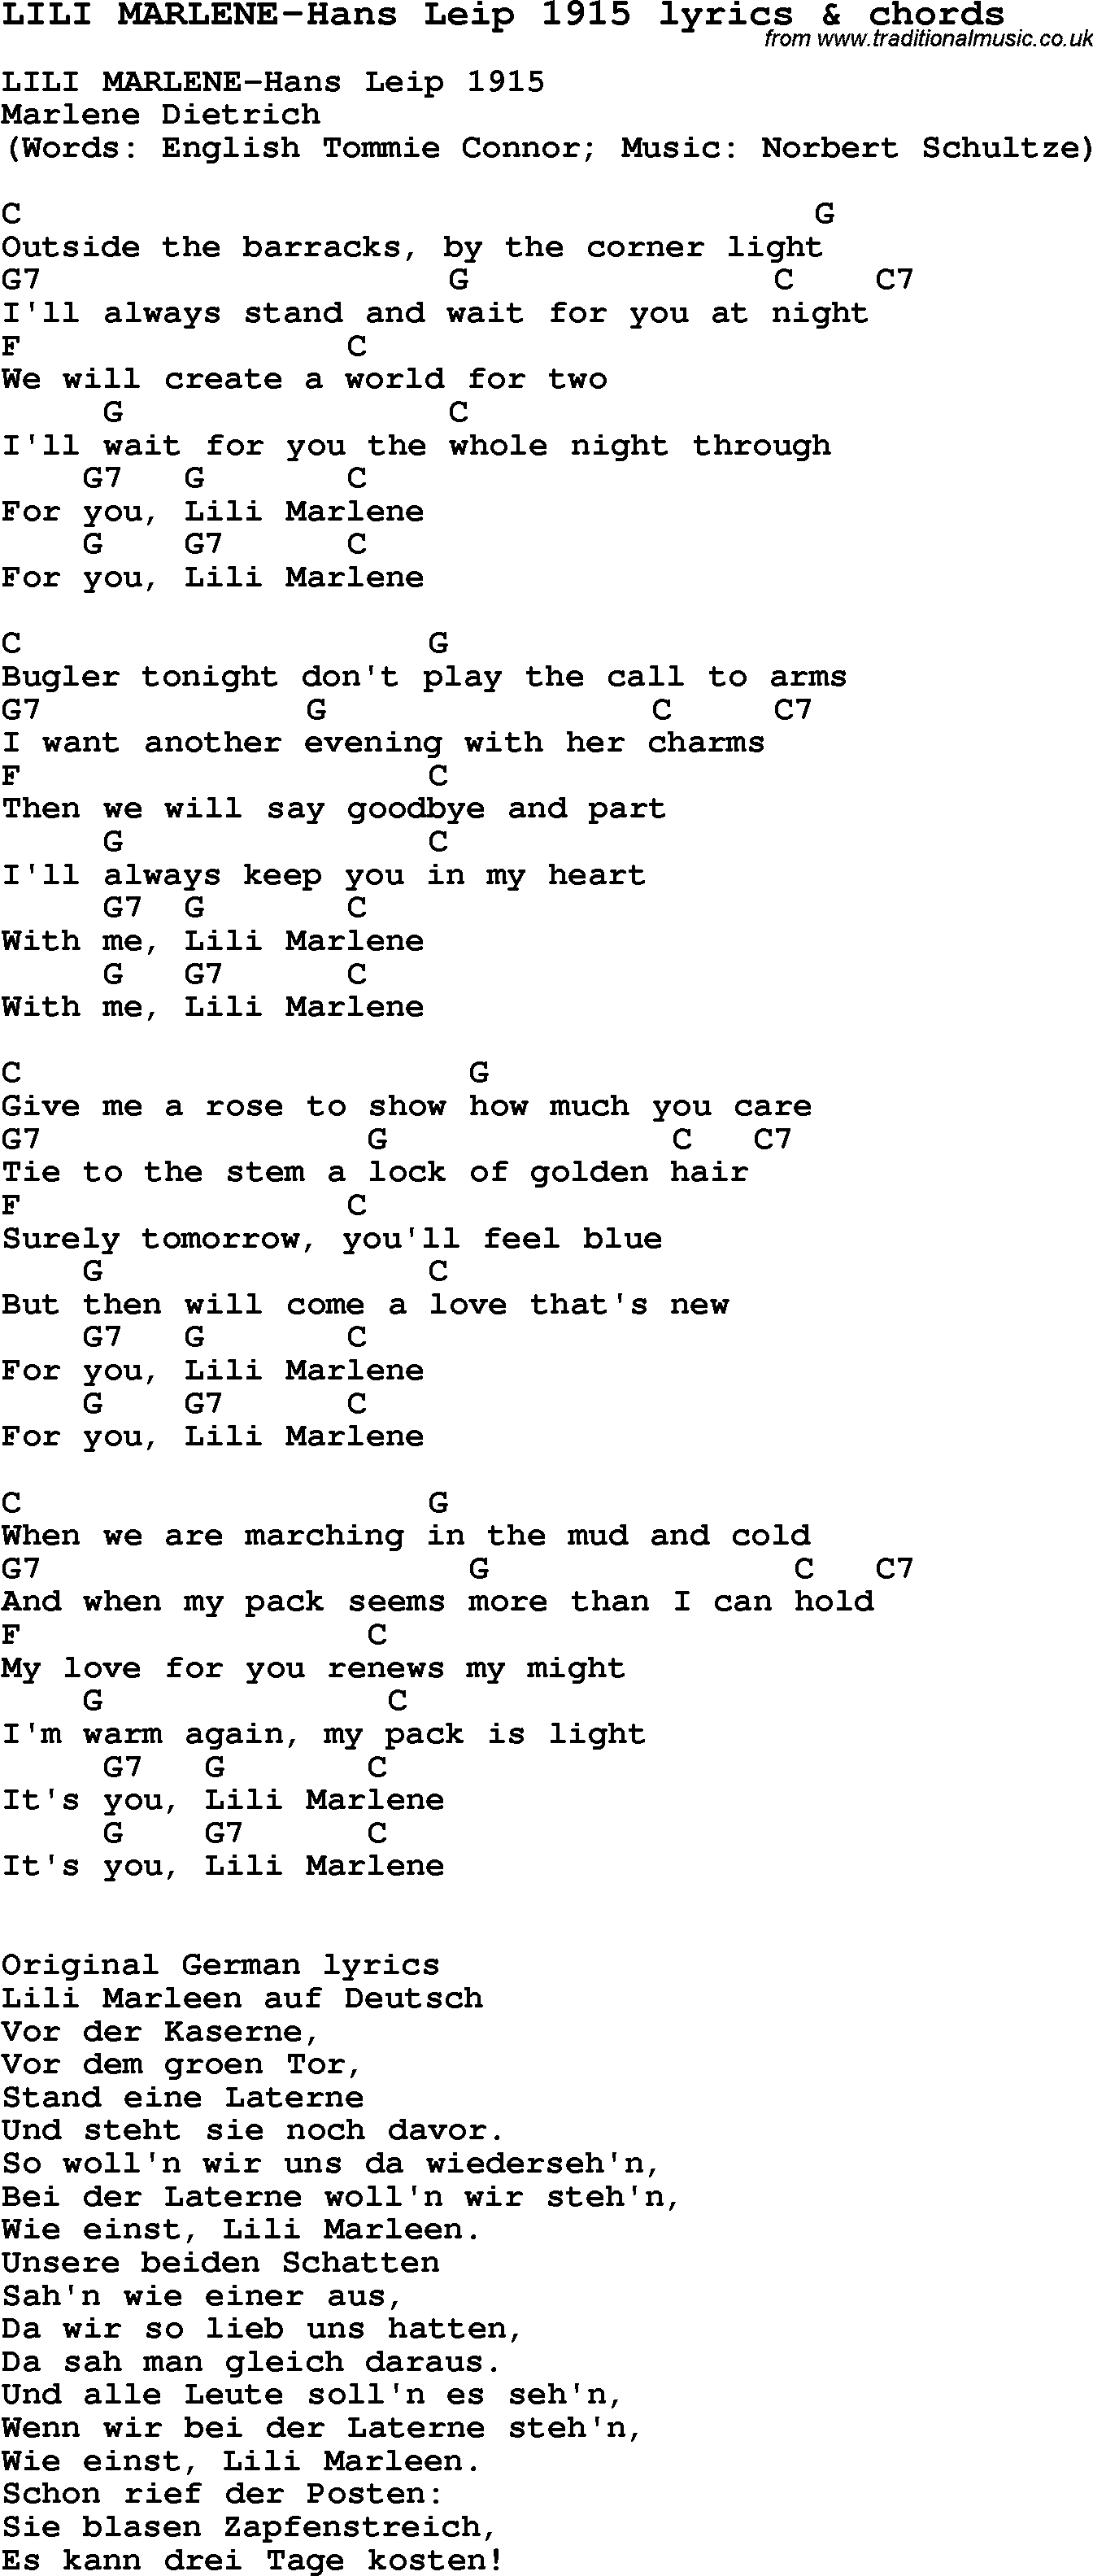 Love Song Lyrics for: LILI MARLENE-Hans Leip 1915 with chords for Ukulele, Guitar Banjo etc.